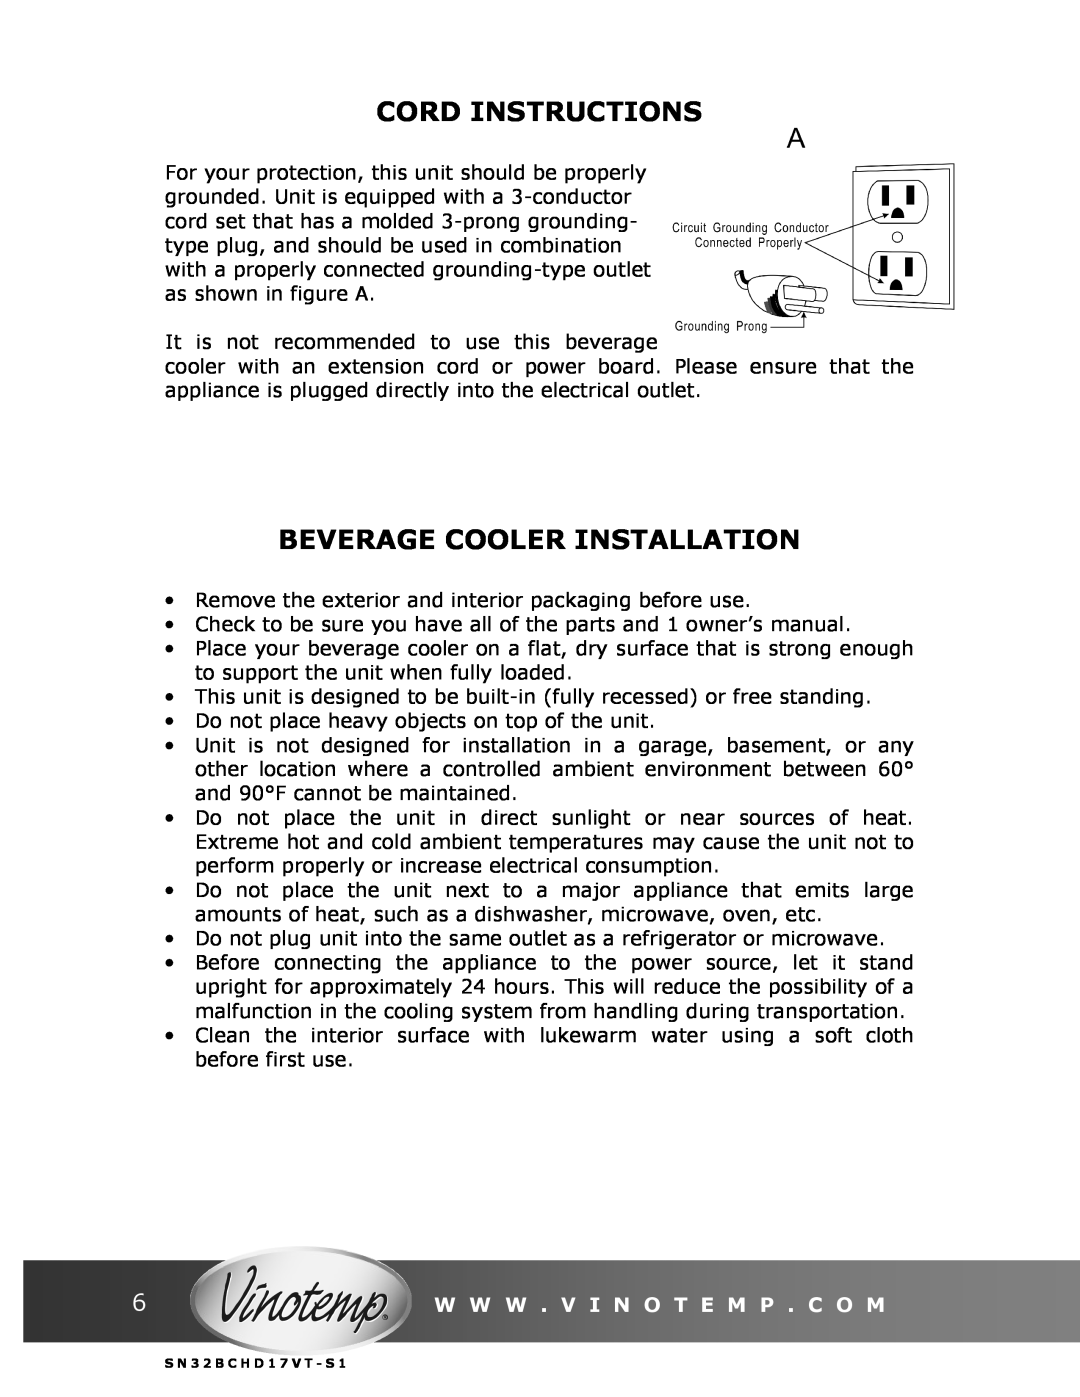 Vinotemp VT-32BCSB manual Cord Instructions, Beverage Cooler Installation, W W W . V I N O T E M P . C O M 